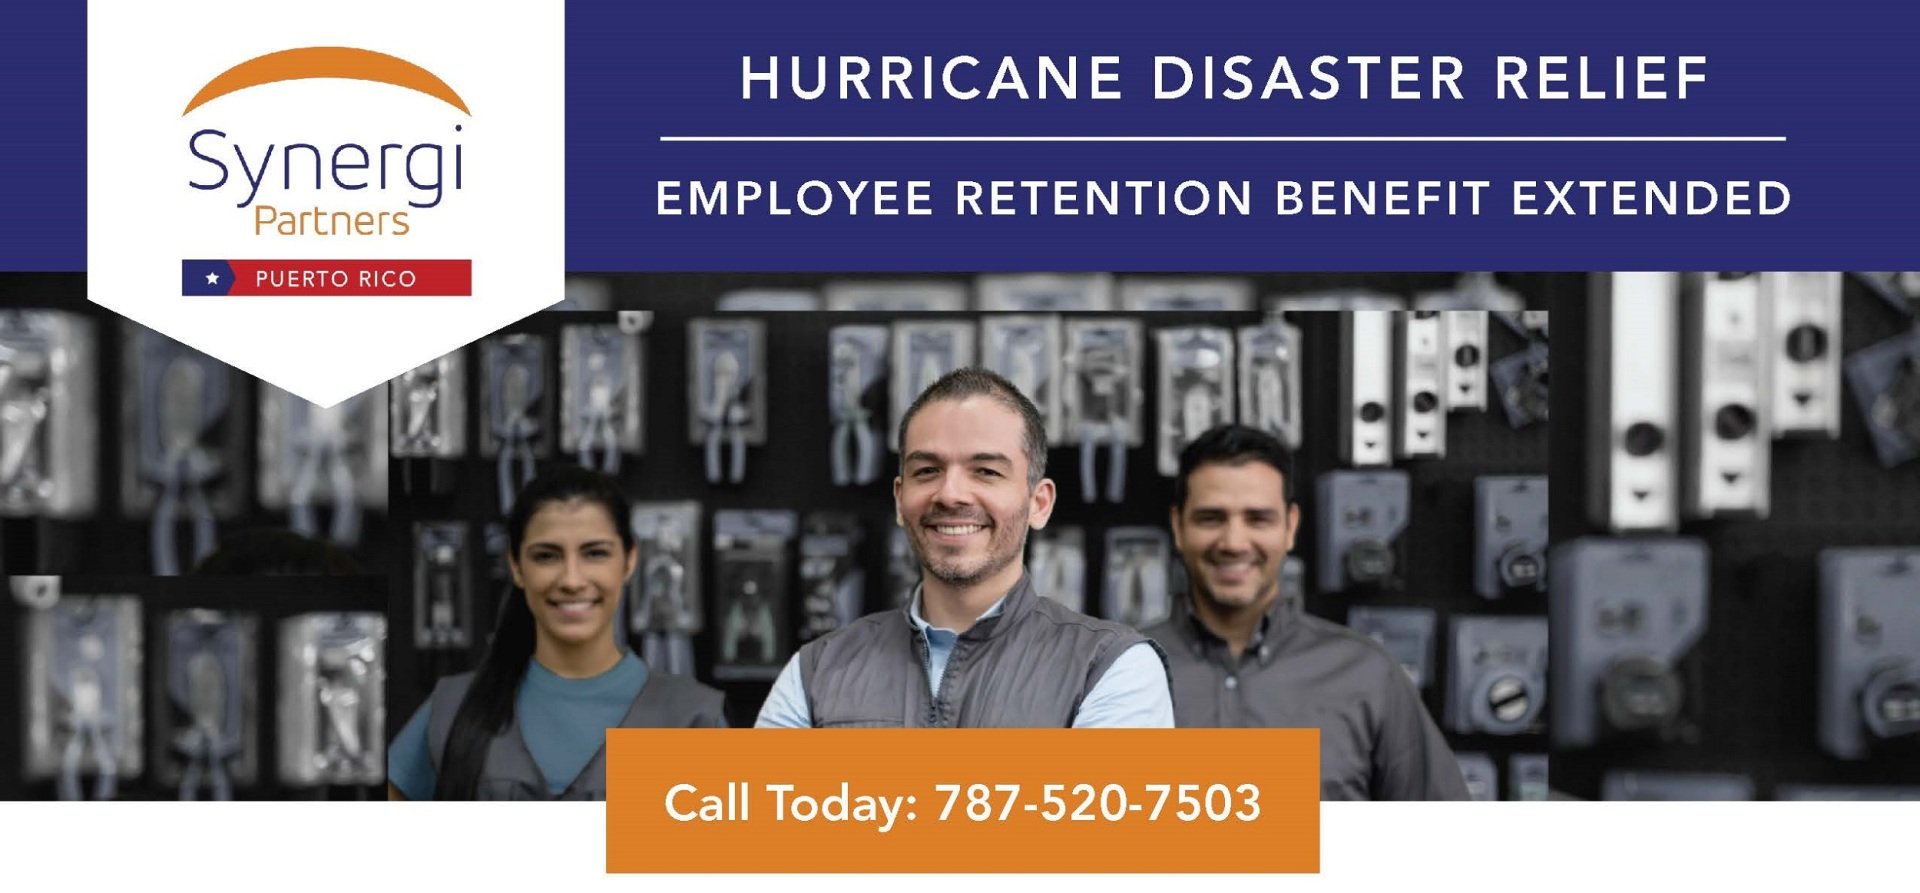 Puerto Rico Treasury Department Announces Extension of Employee Retention Benefit Program